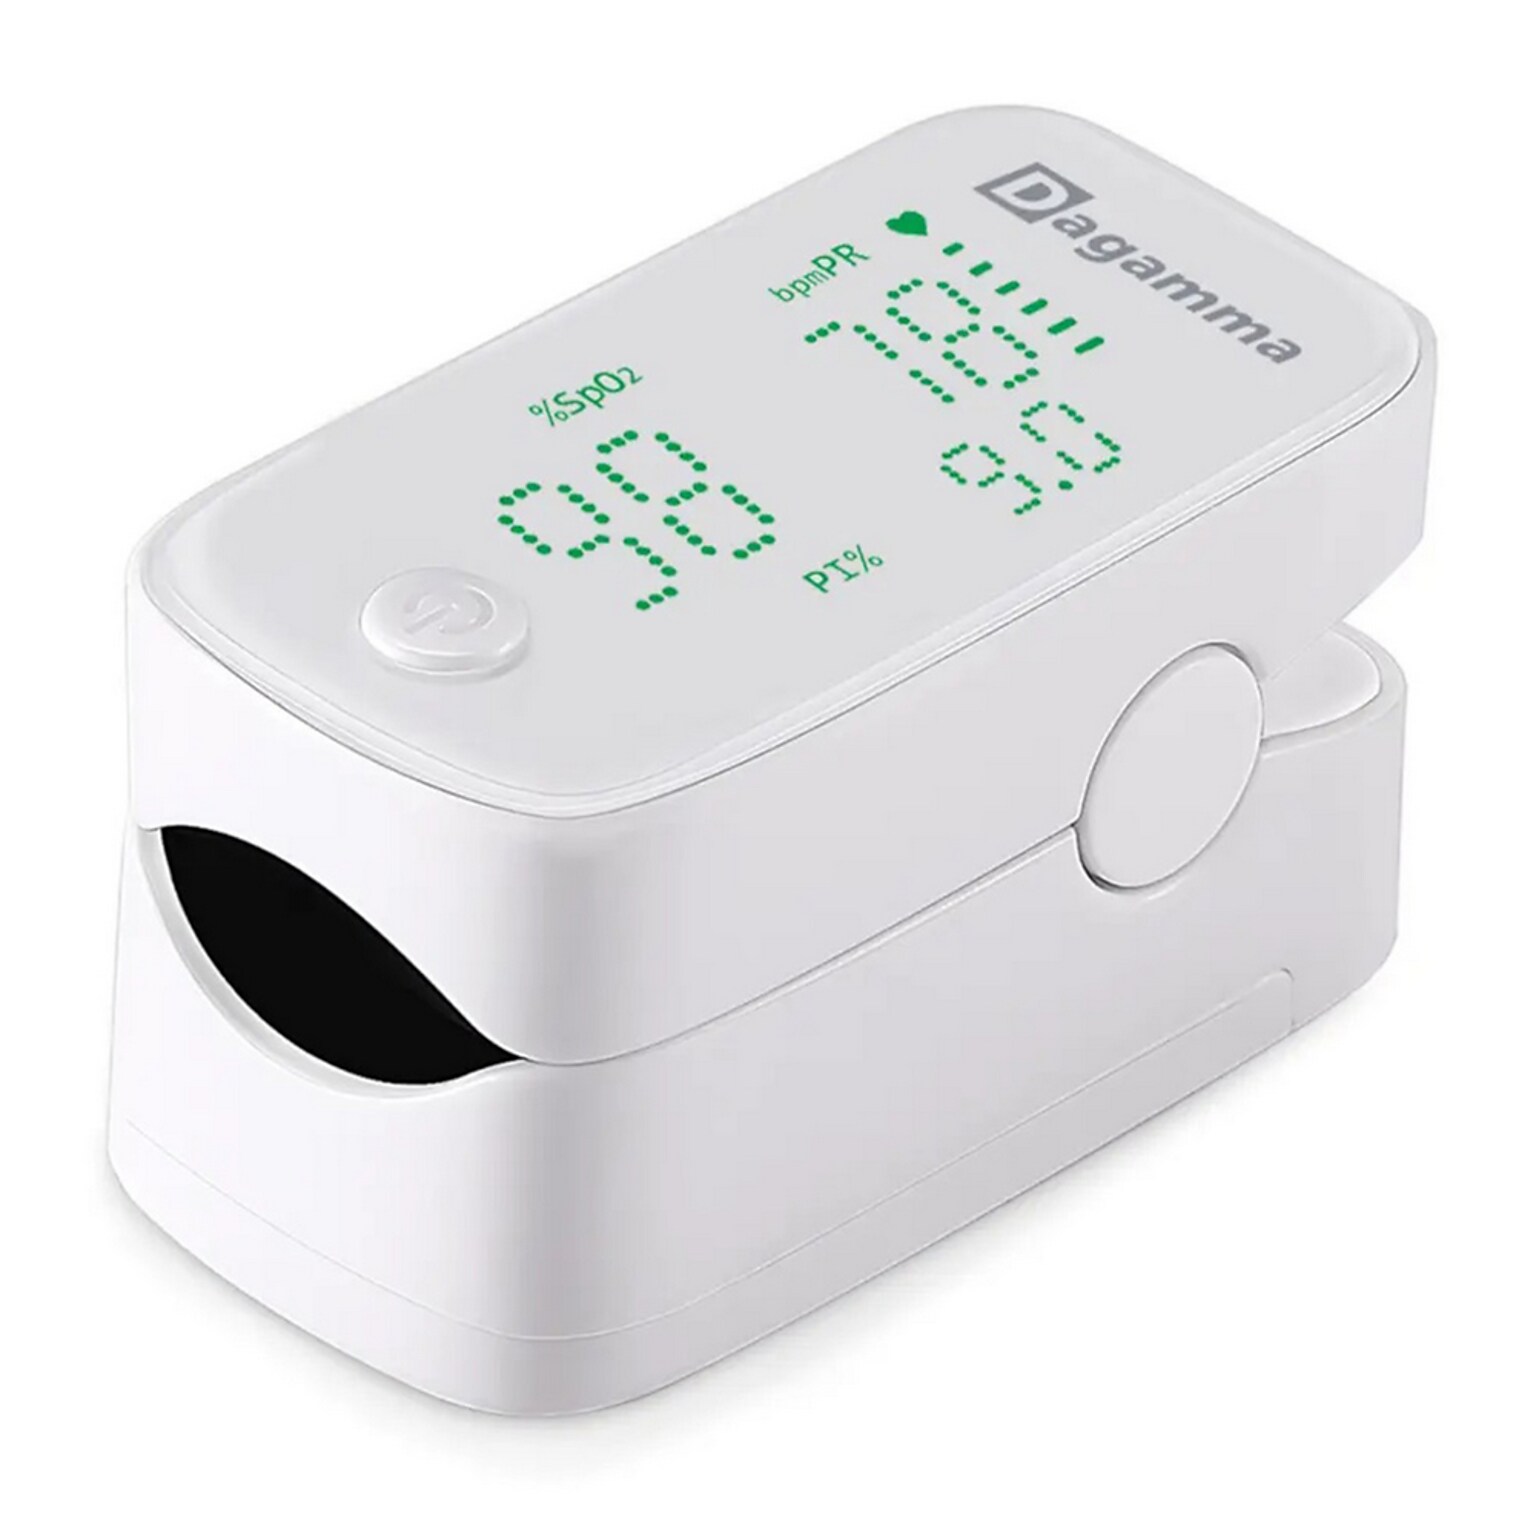 DP250 Premium Finger Pulse Oximeter with User Configurable Audio SpO2 and Heart Rate Alarm, White (DMDE2700402)